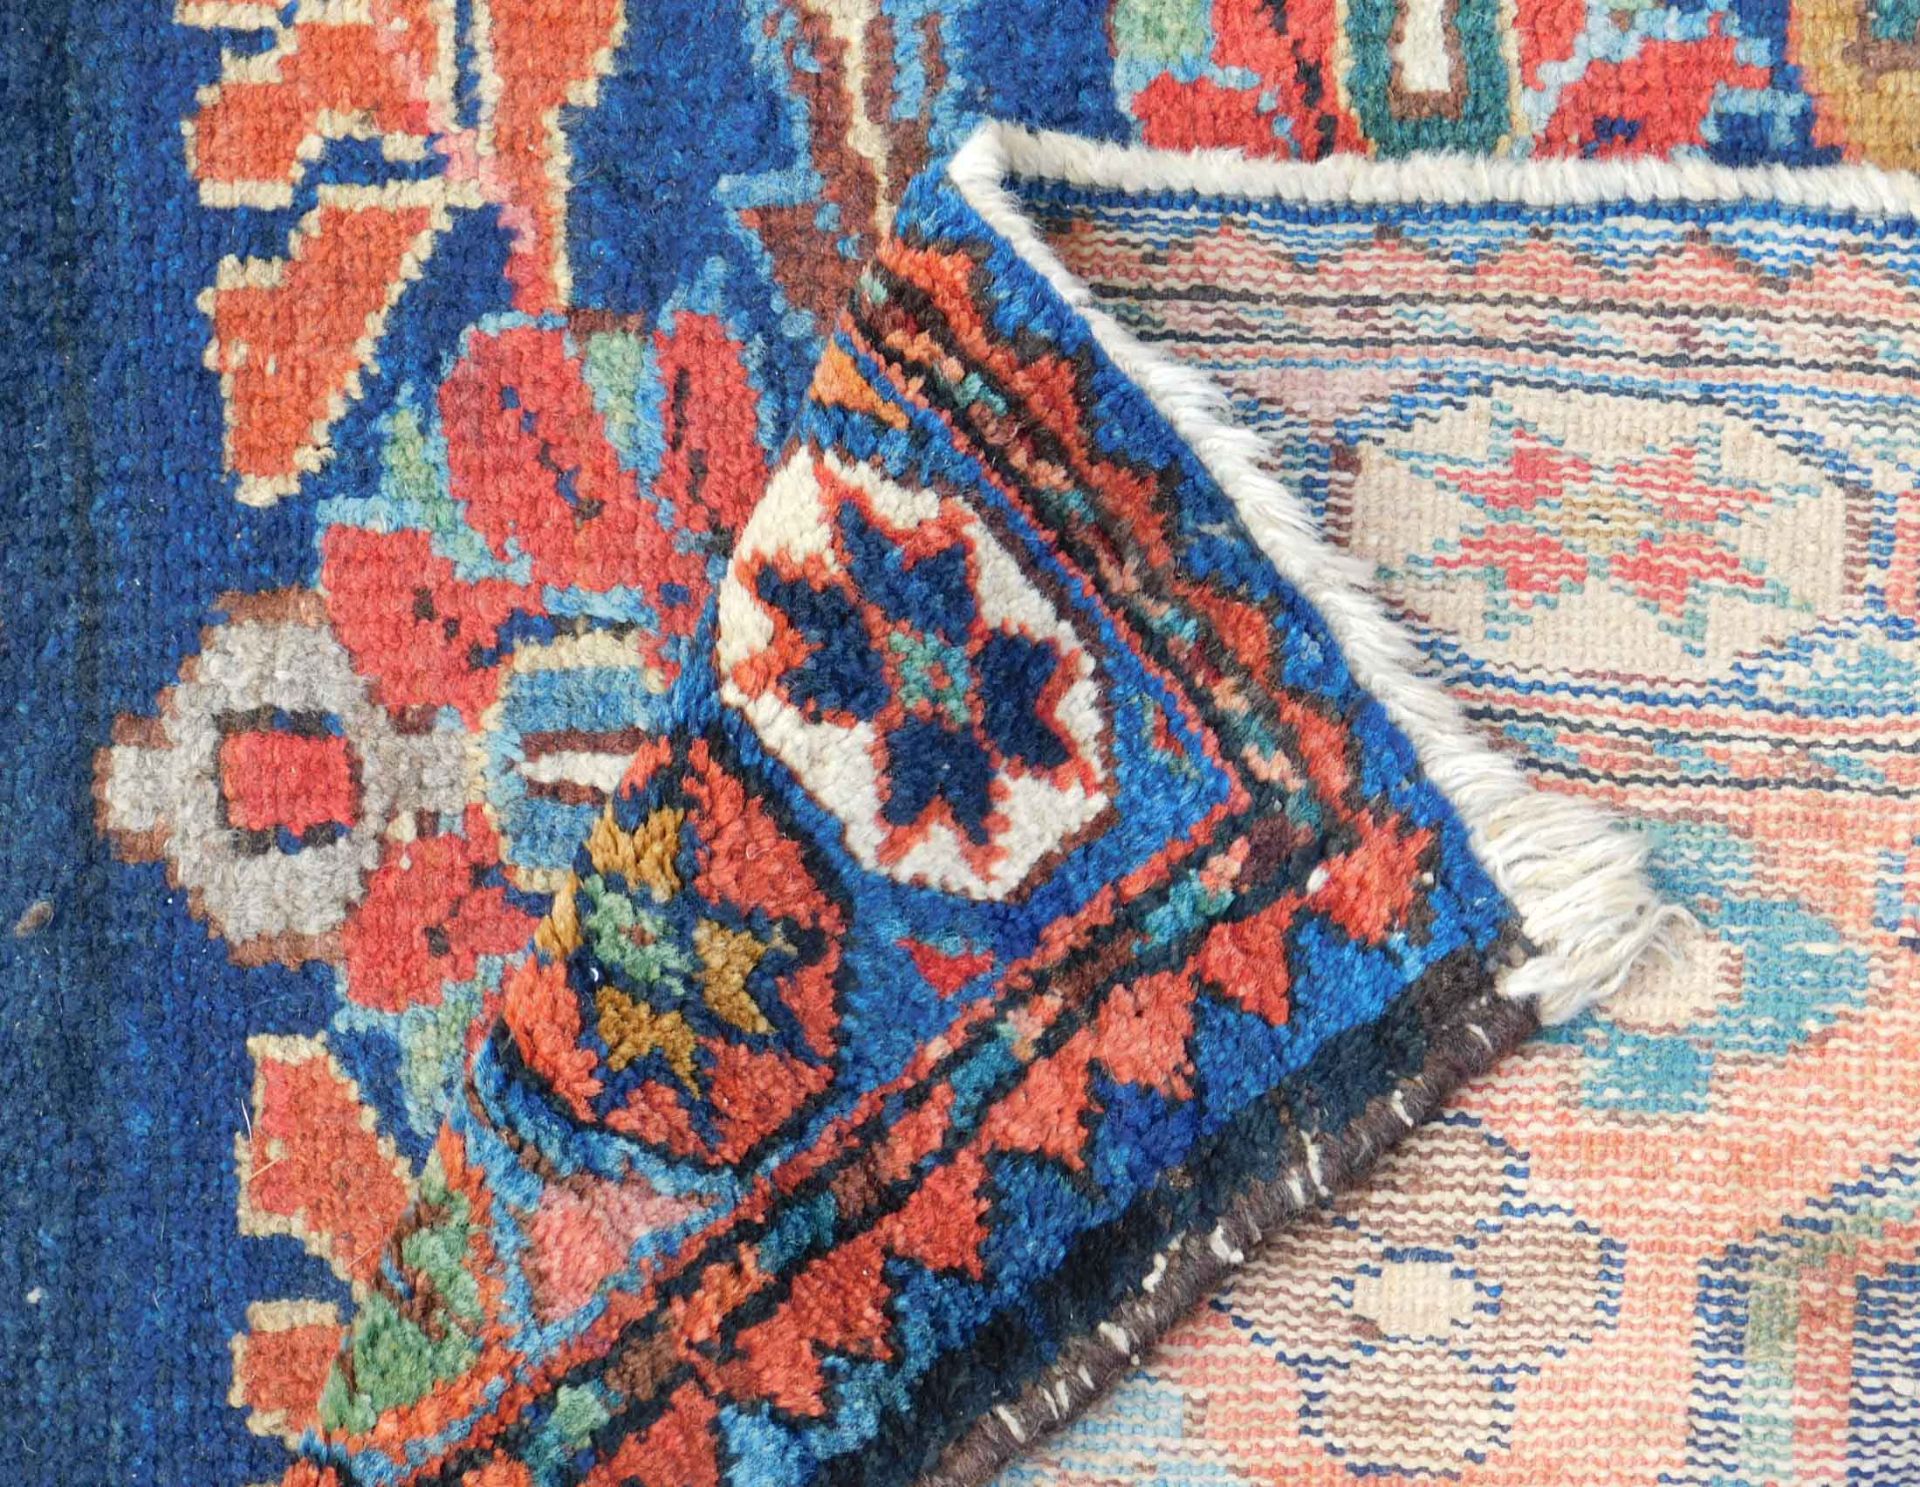 Karagöz Persian rug. Iran. Around 80 - 100 years old. - Image 2 of 8